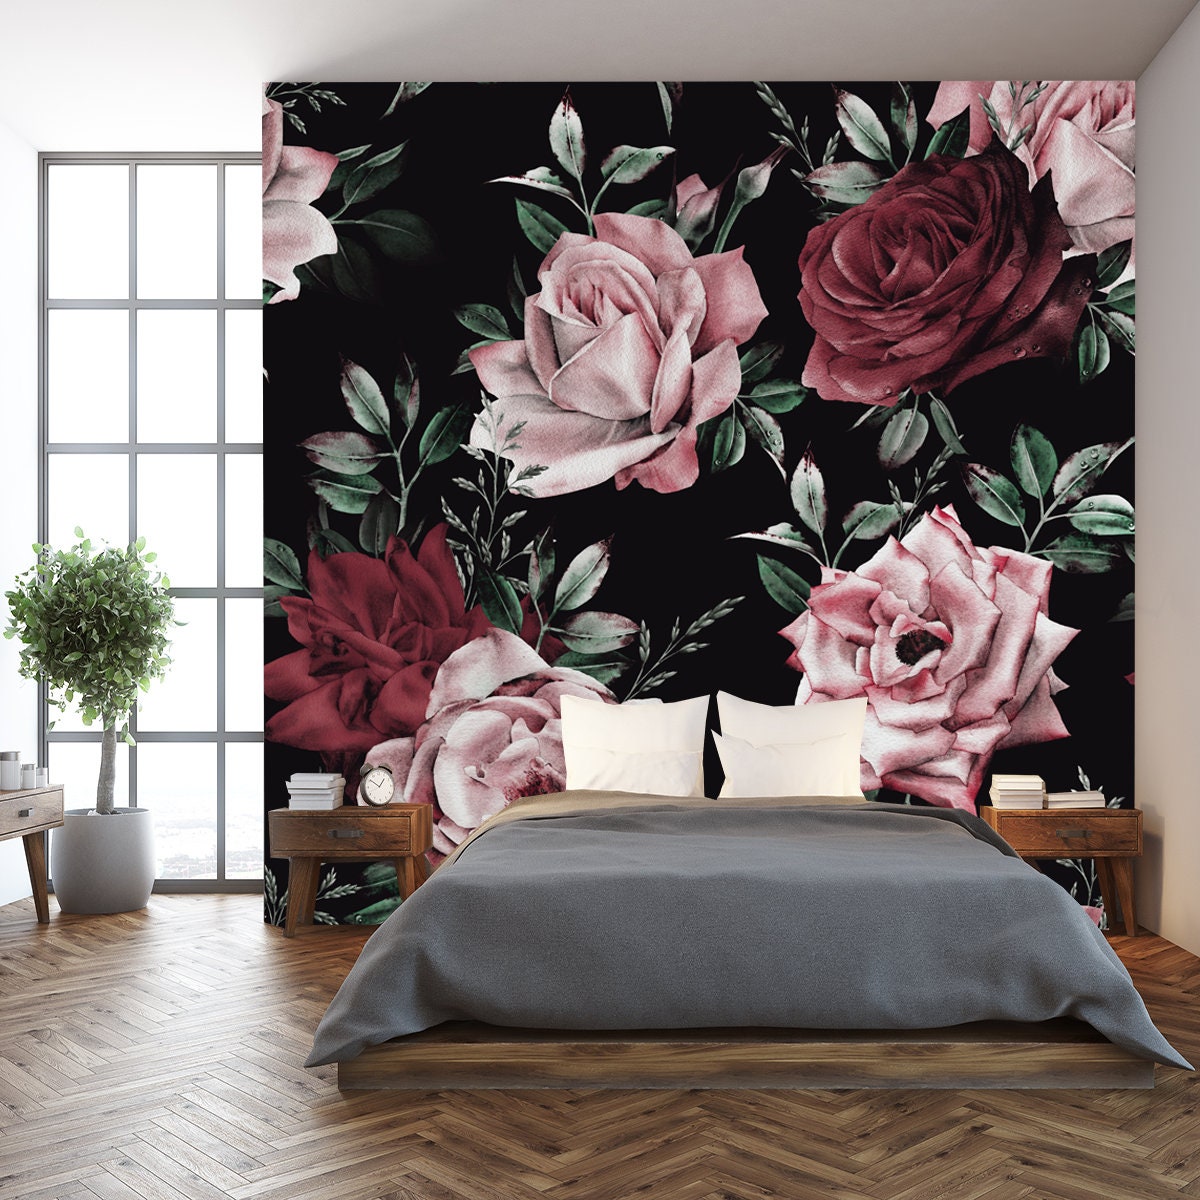 Seamless Rose Pattern with Flowers on Dark Background Wallpaper Bedroom Mural